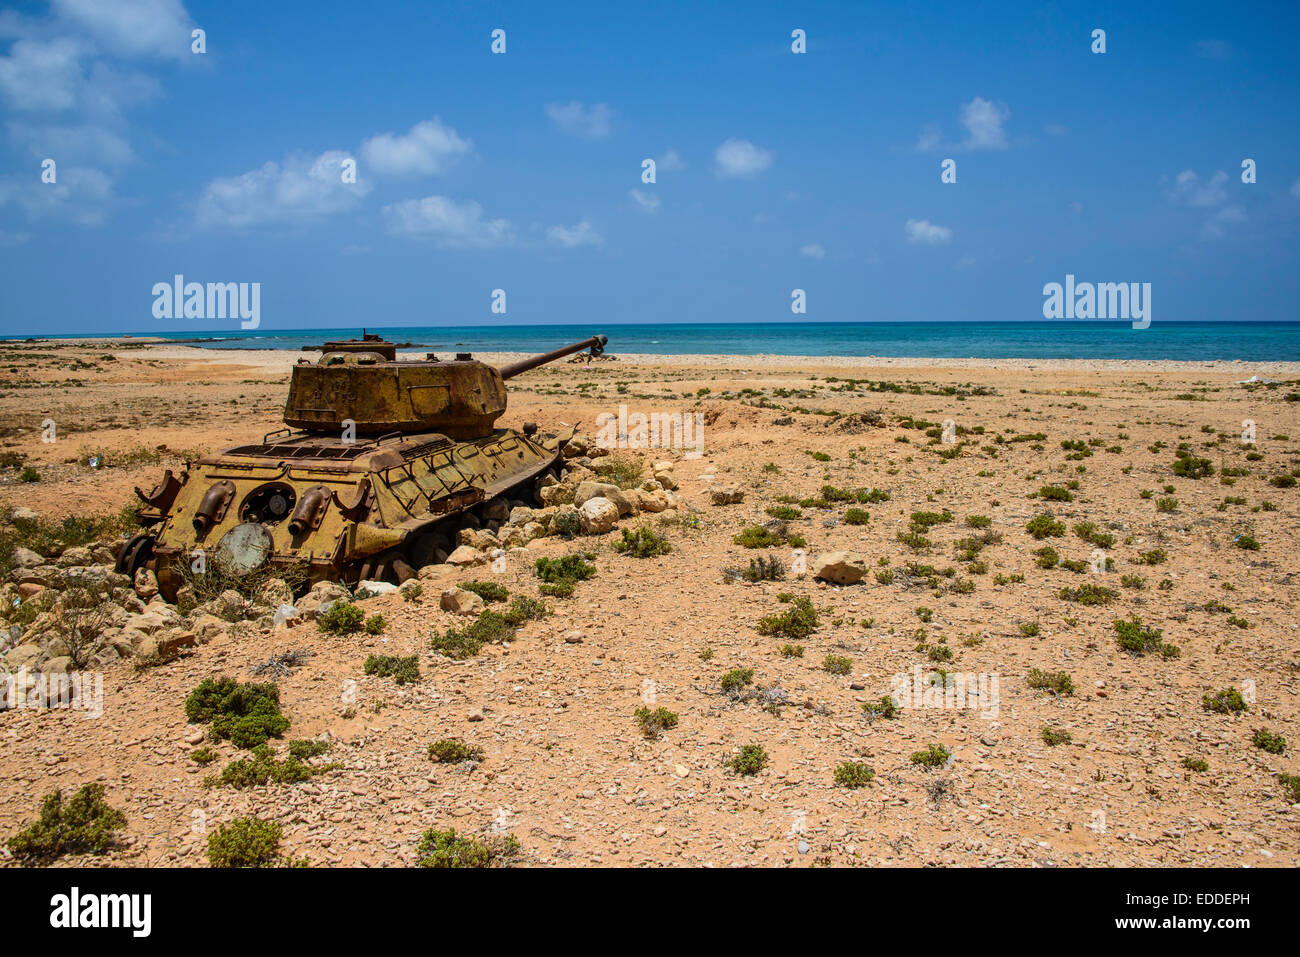 Old Russian tank, Qalansia, island of Socotra, Yemen Stock Photo